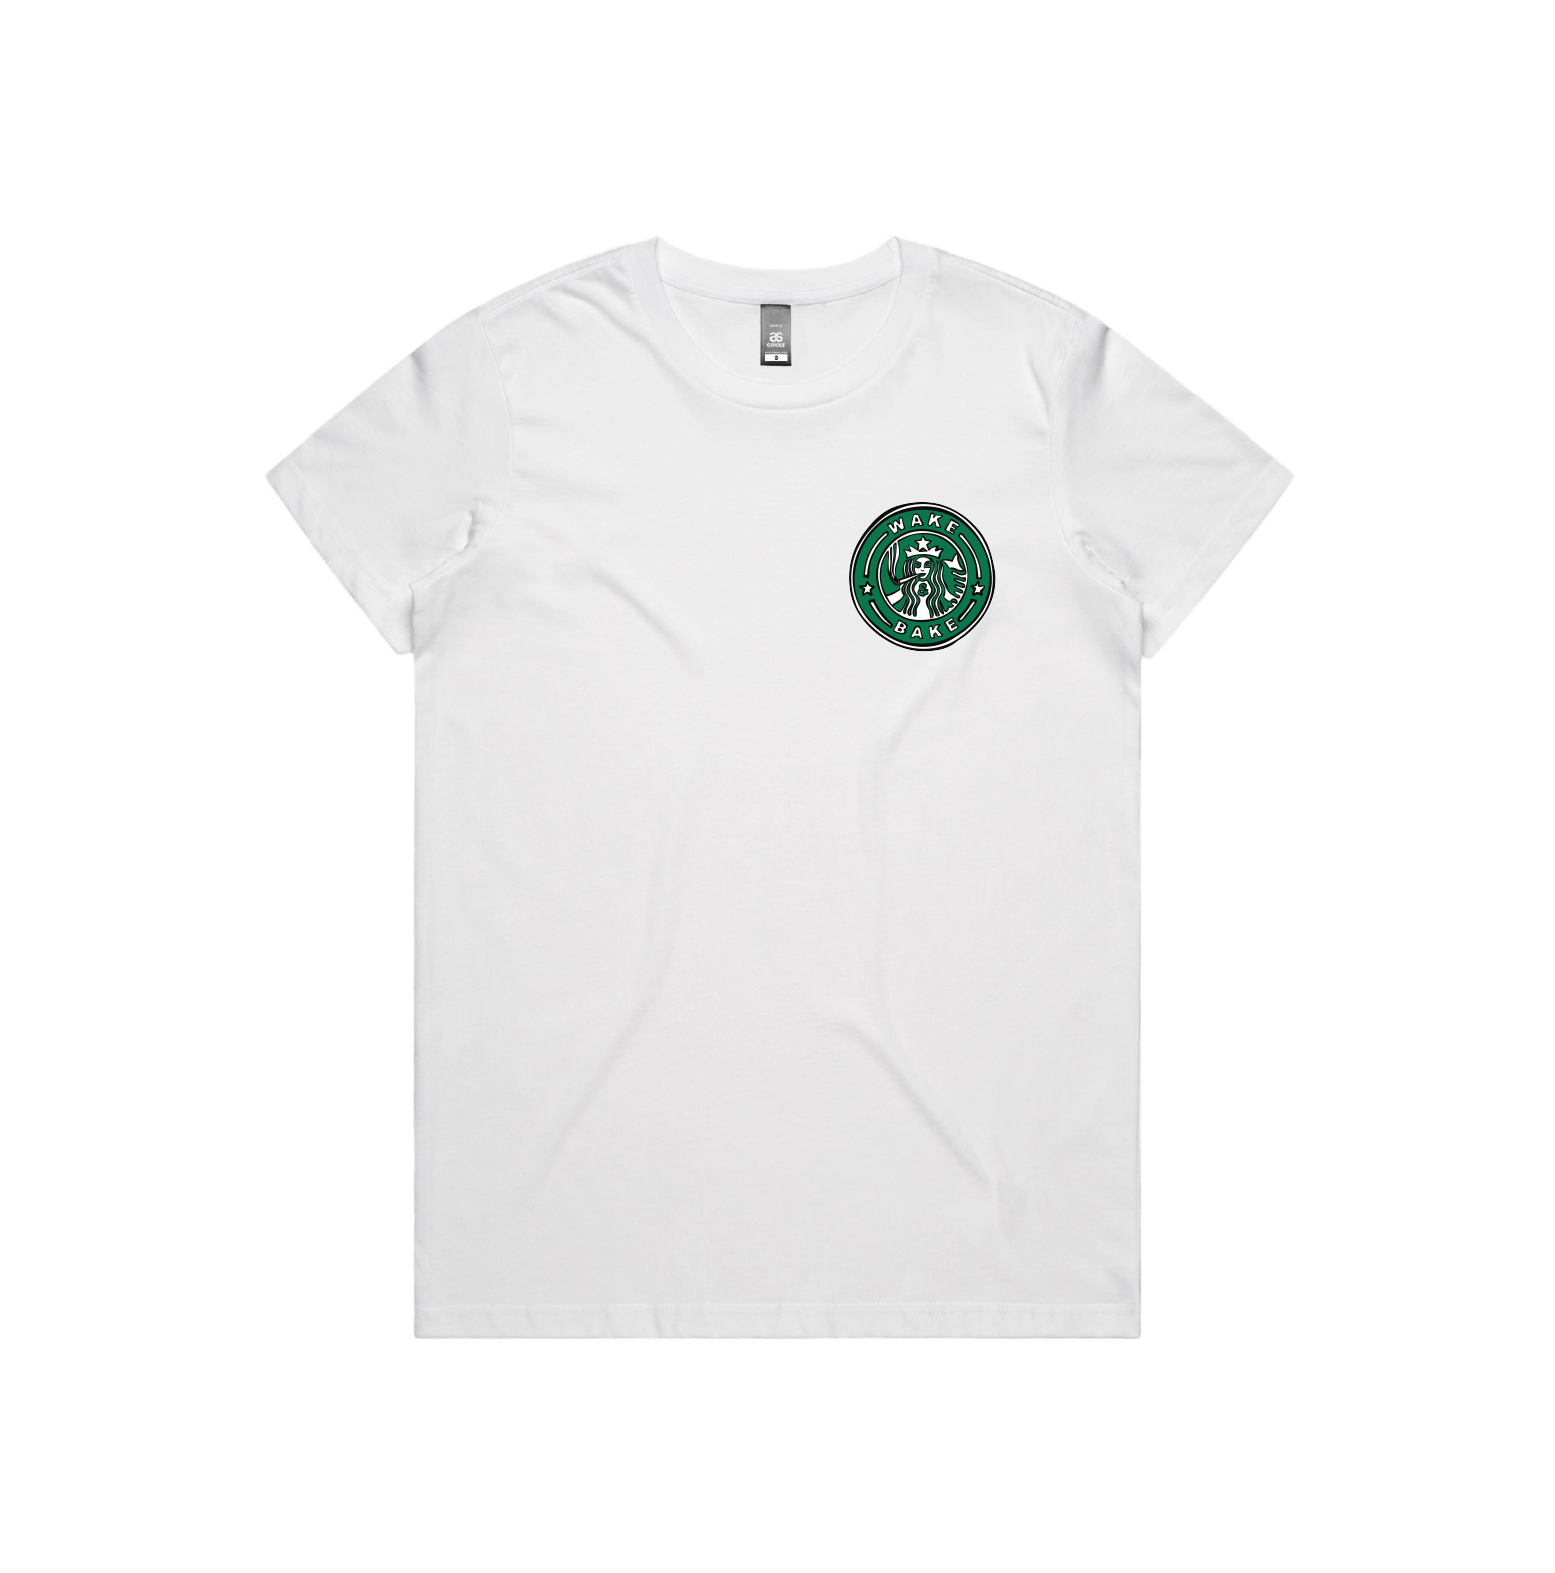 XS / White / Small Front Design Wake & Bake 🚬 - Women's T Shirt